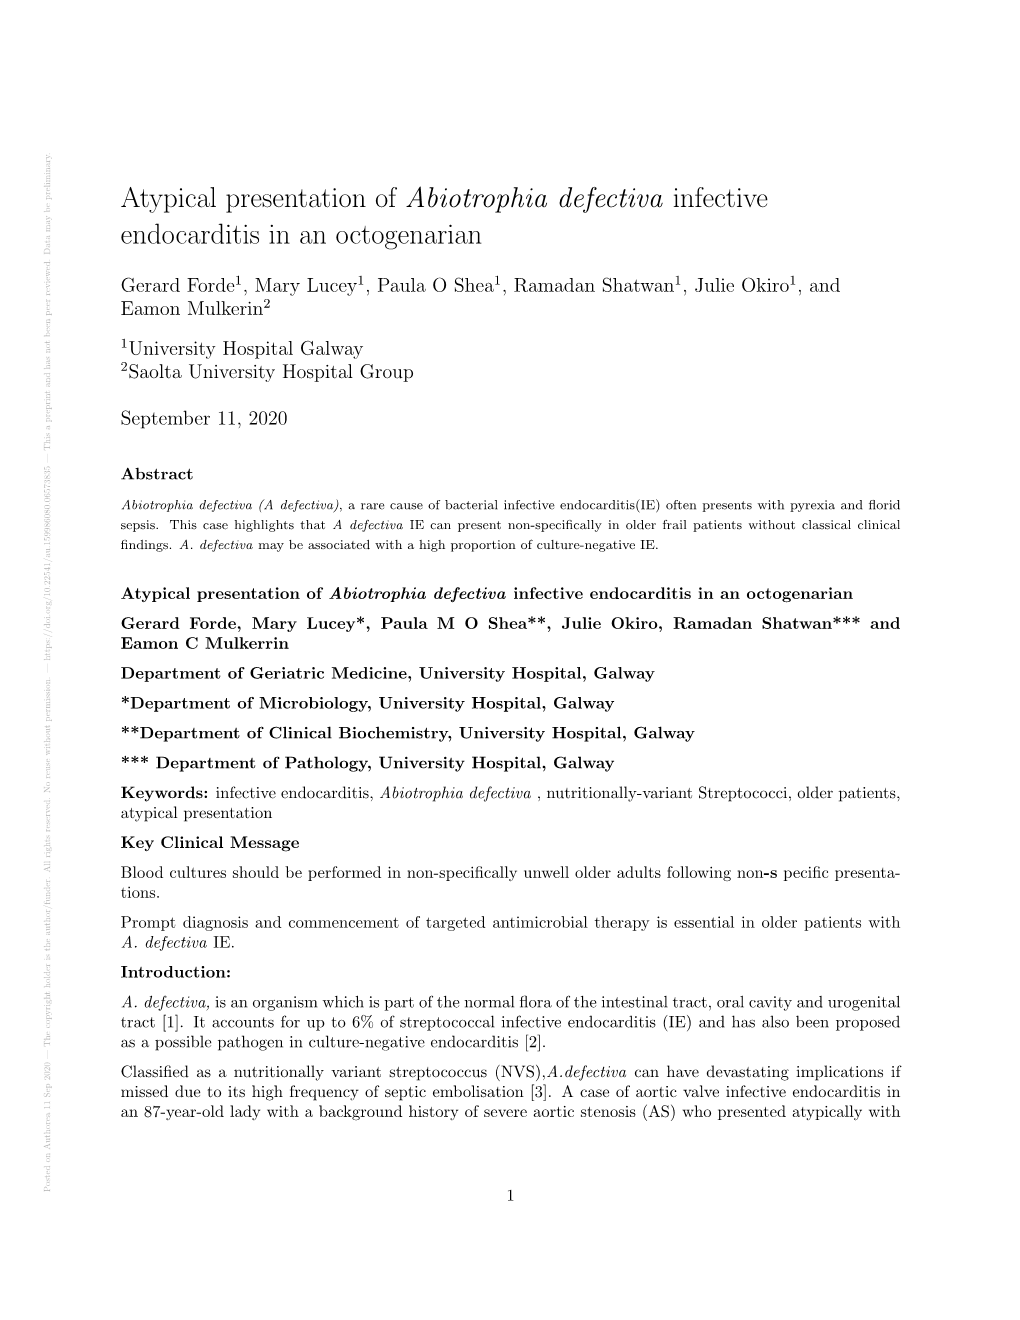 Atypical Presentation of Abiotrophia Defectiva Infective Endocarditis in an Octogenarian